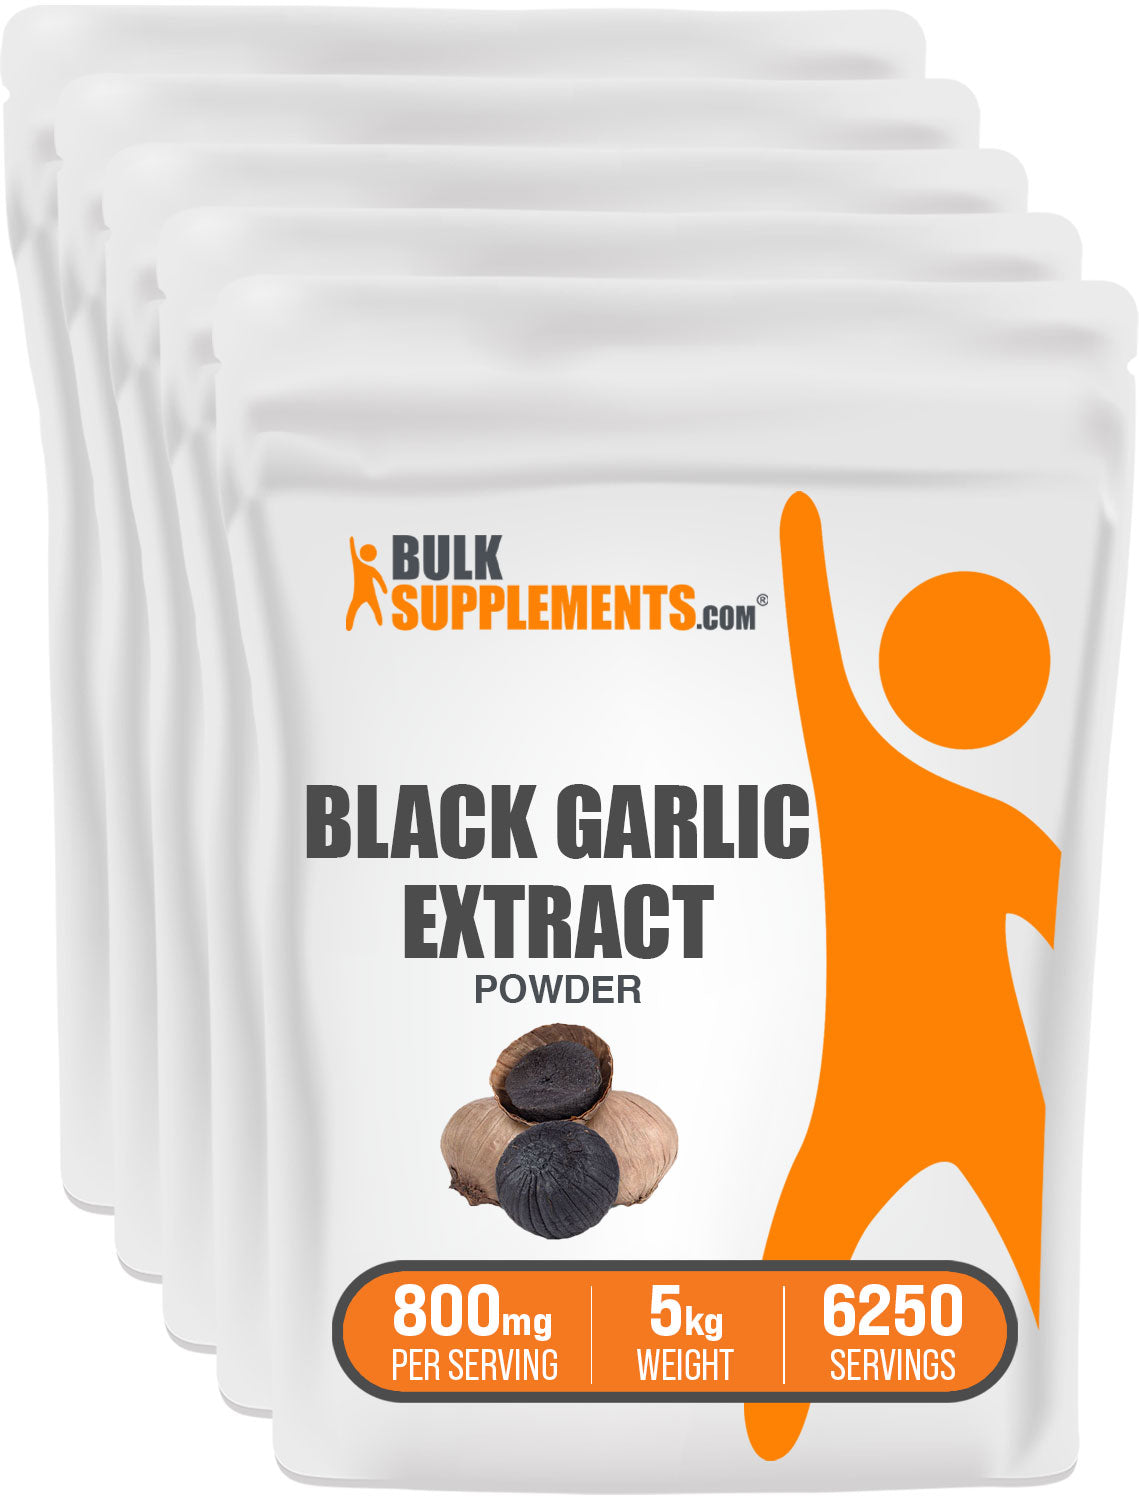 BulkSupplements.com Black garlic extract powder bags 5kg